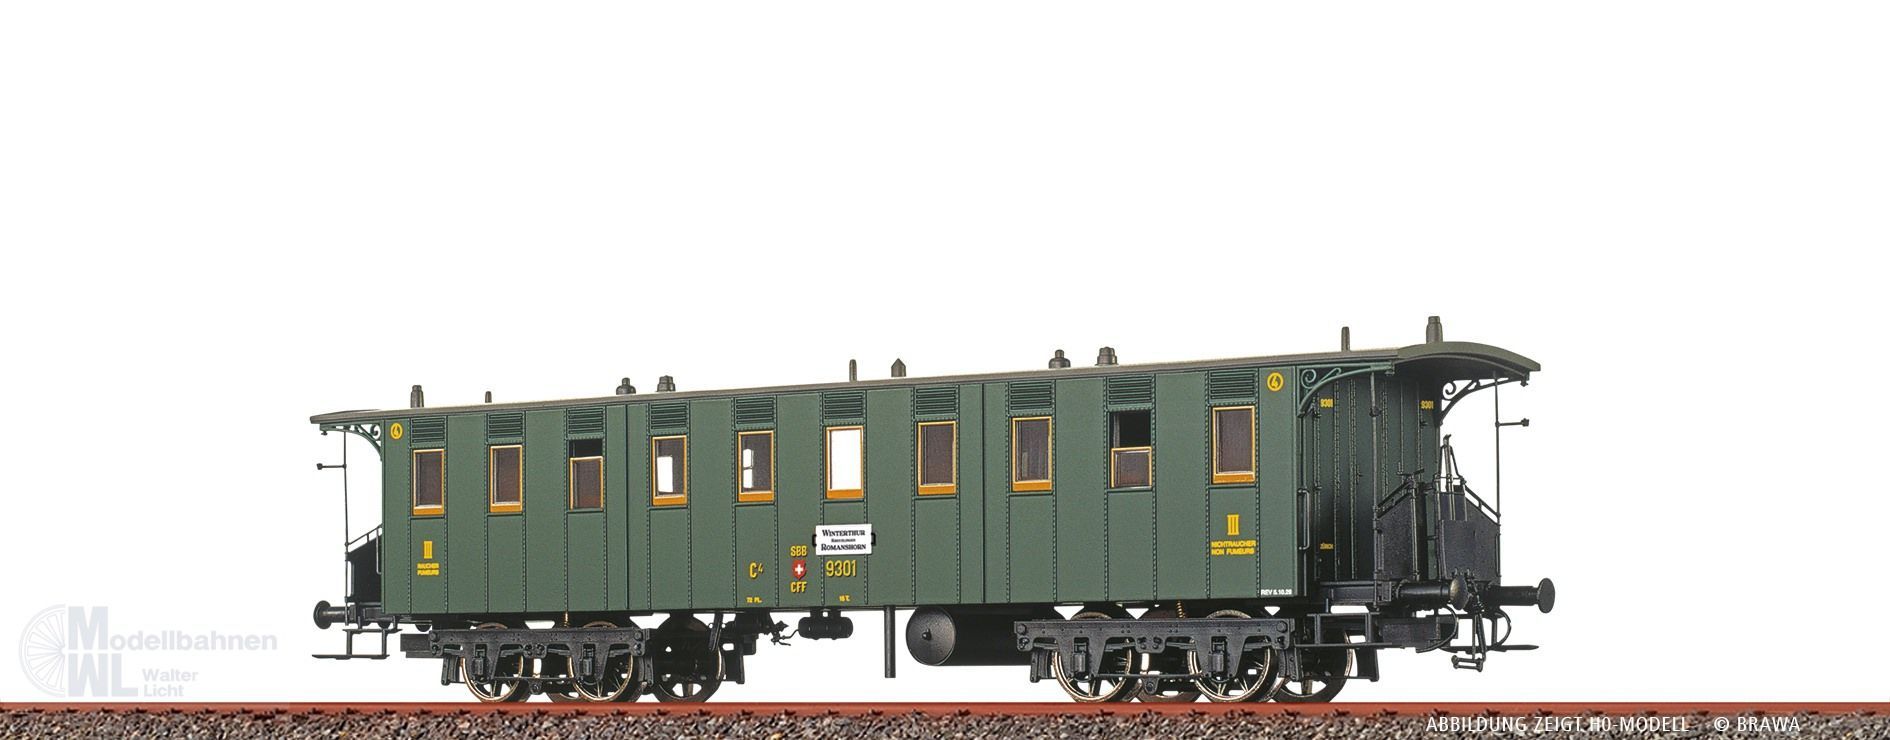 Brawa 65087 - Personenwagen SBB Ep.II C4 9301 N 1:160